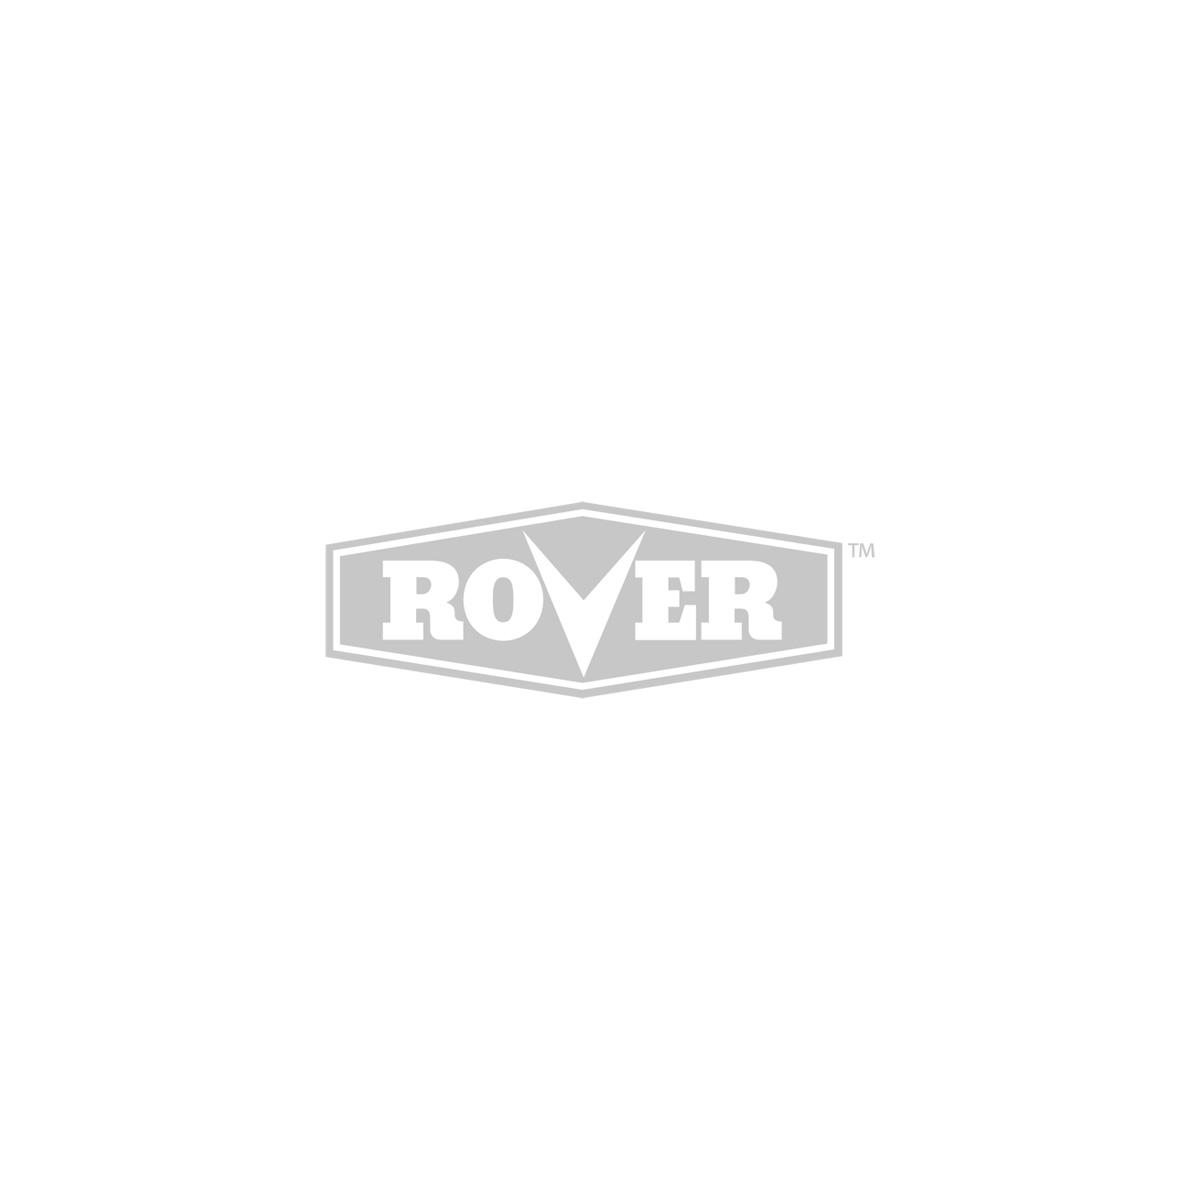 Blades - Micro Rider - Rover